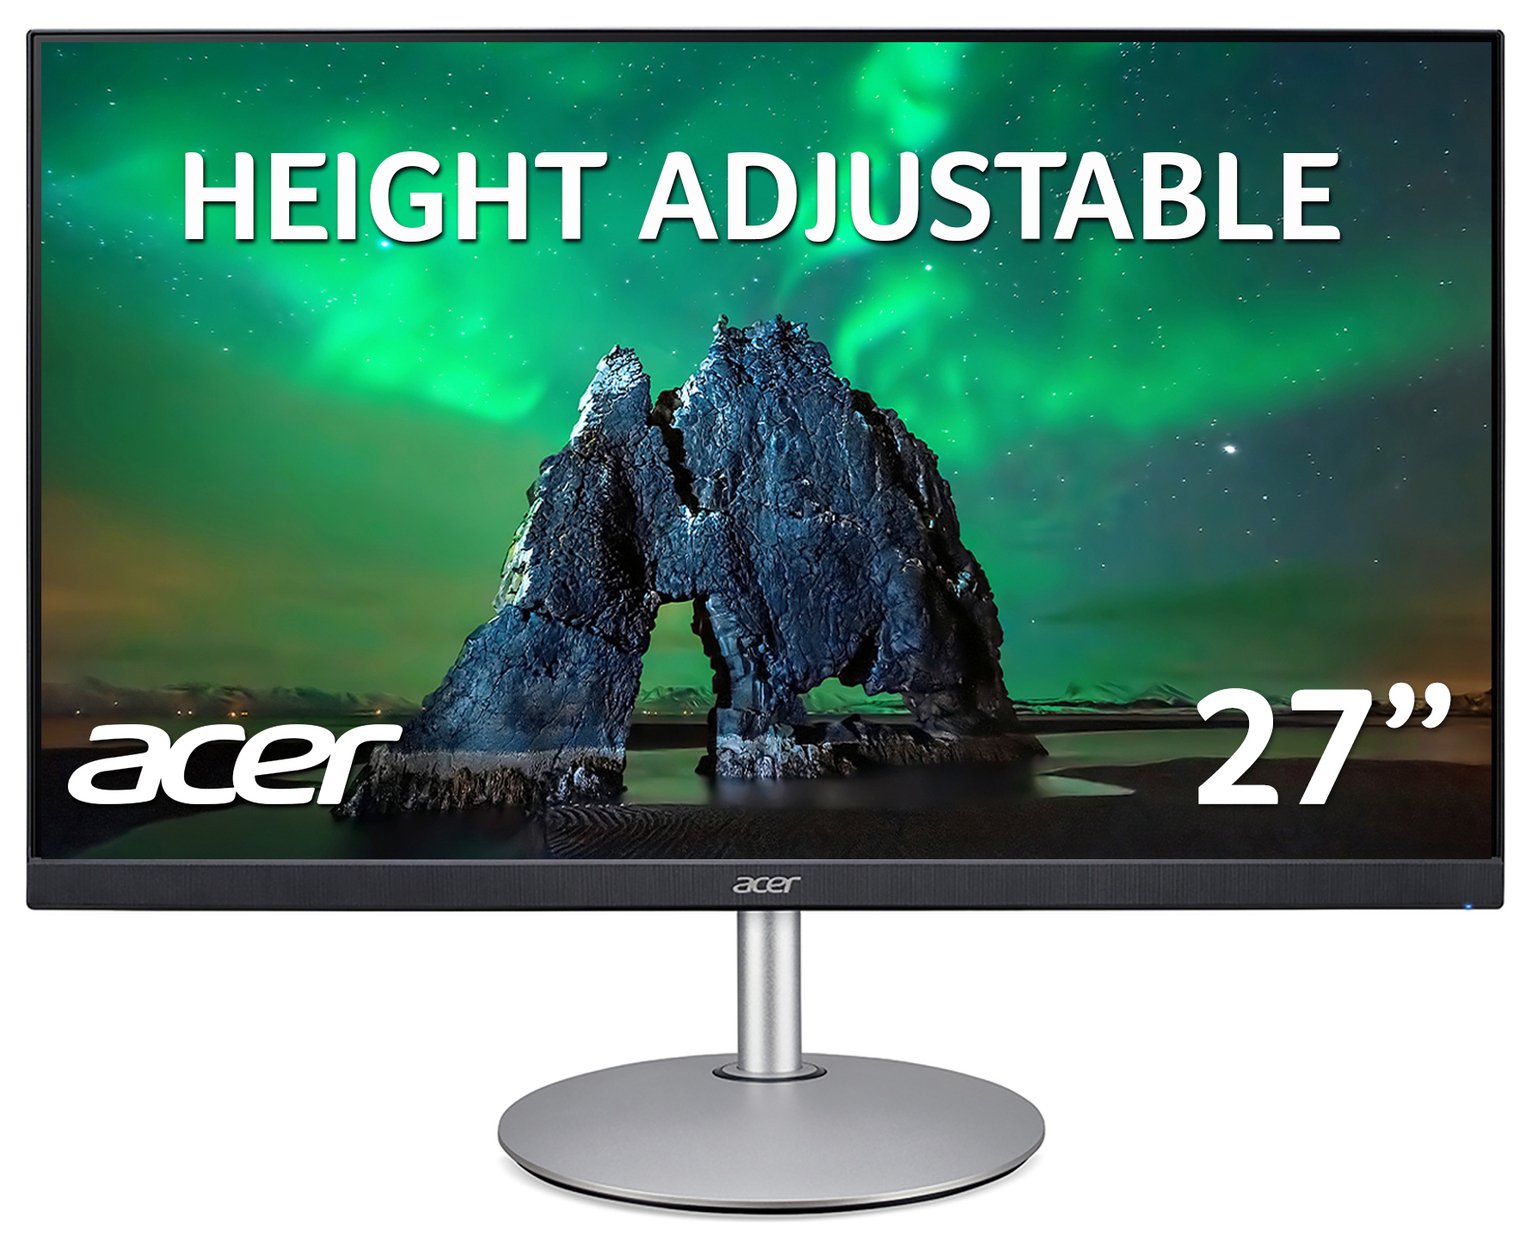 Acer CB272 27 Inch 75Hz FHD Monitor